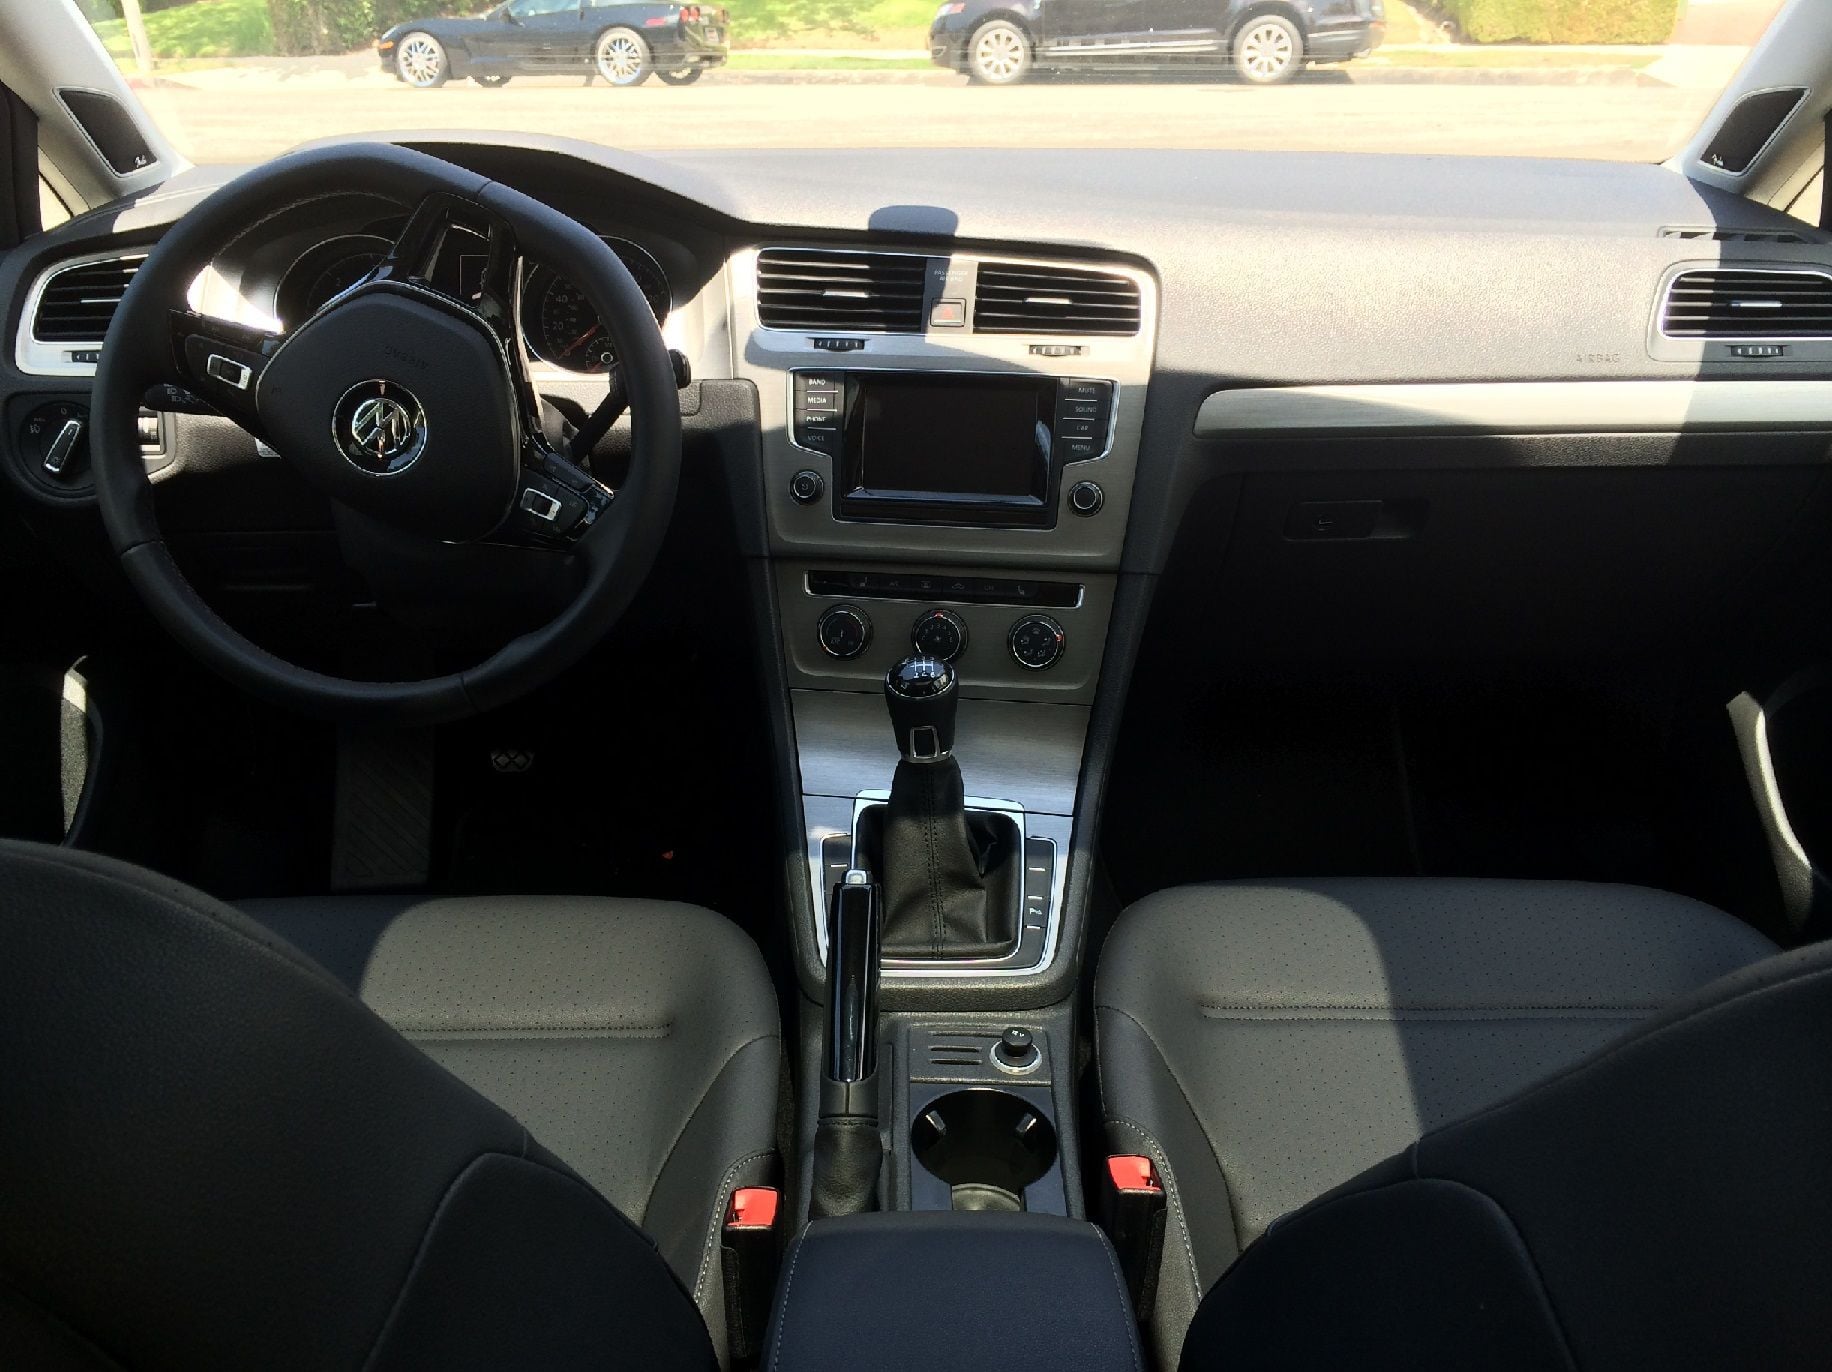 Volkswagen Golf TDI Interior